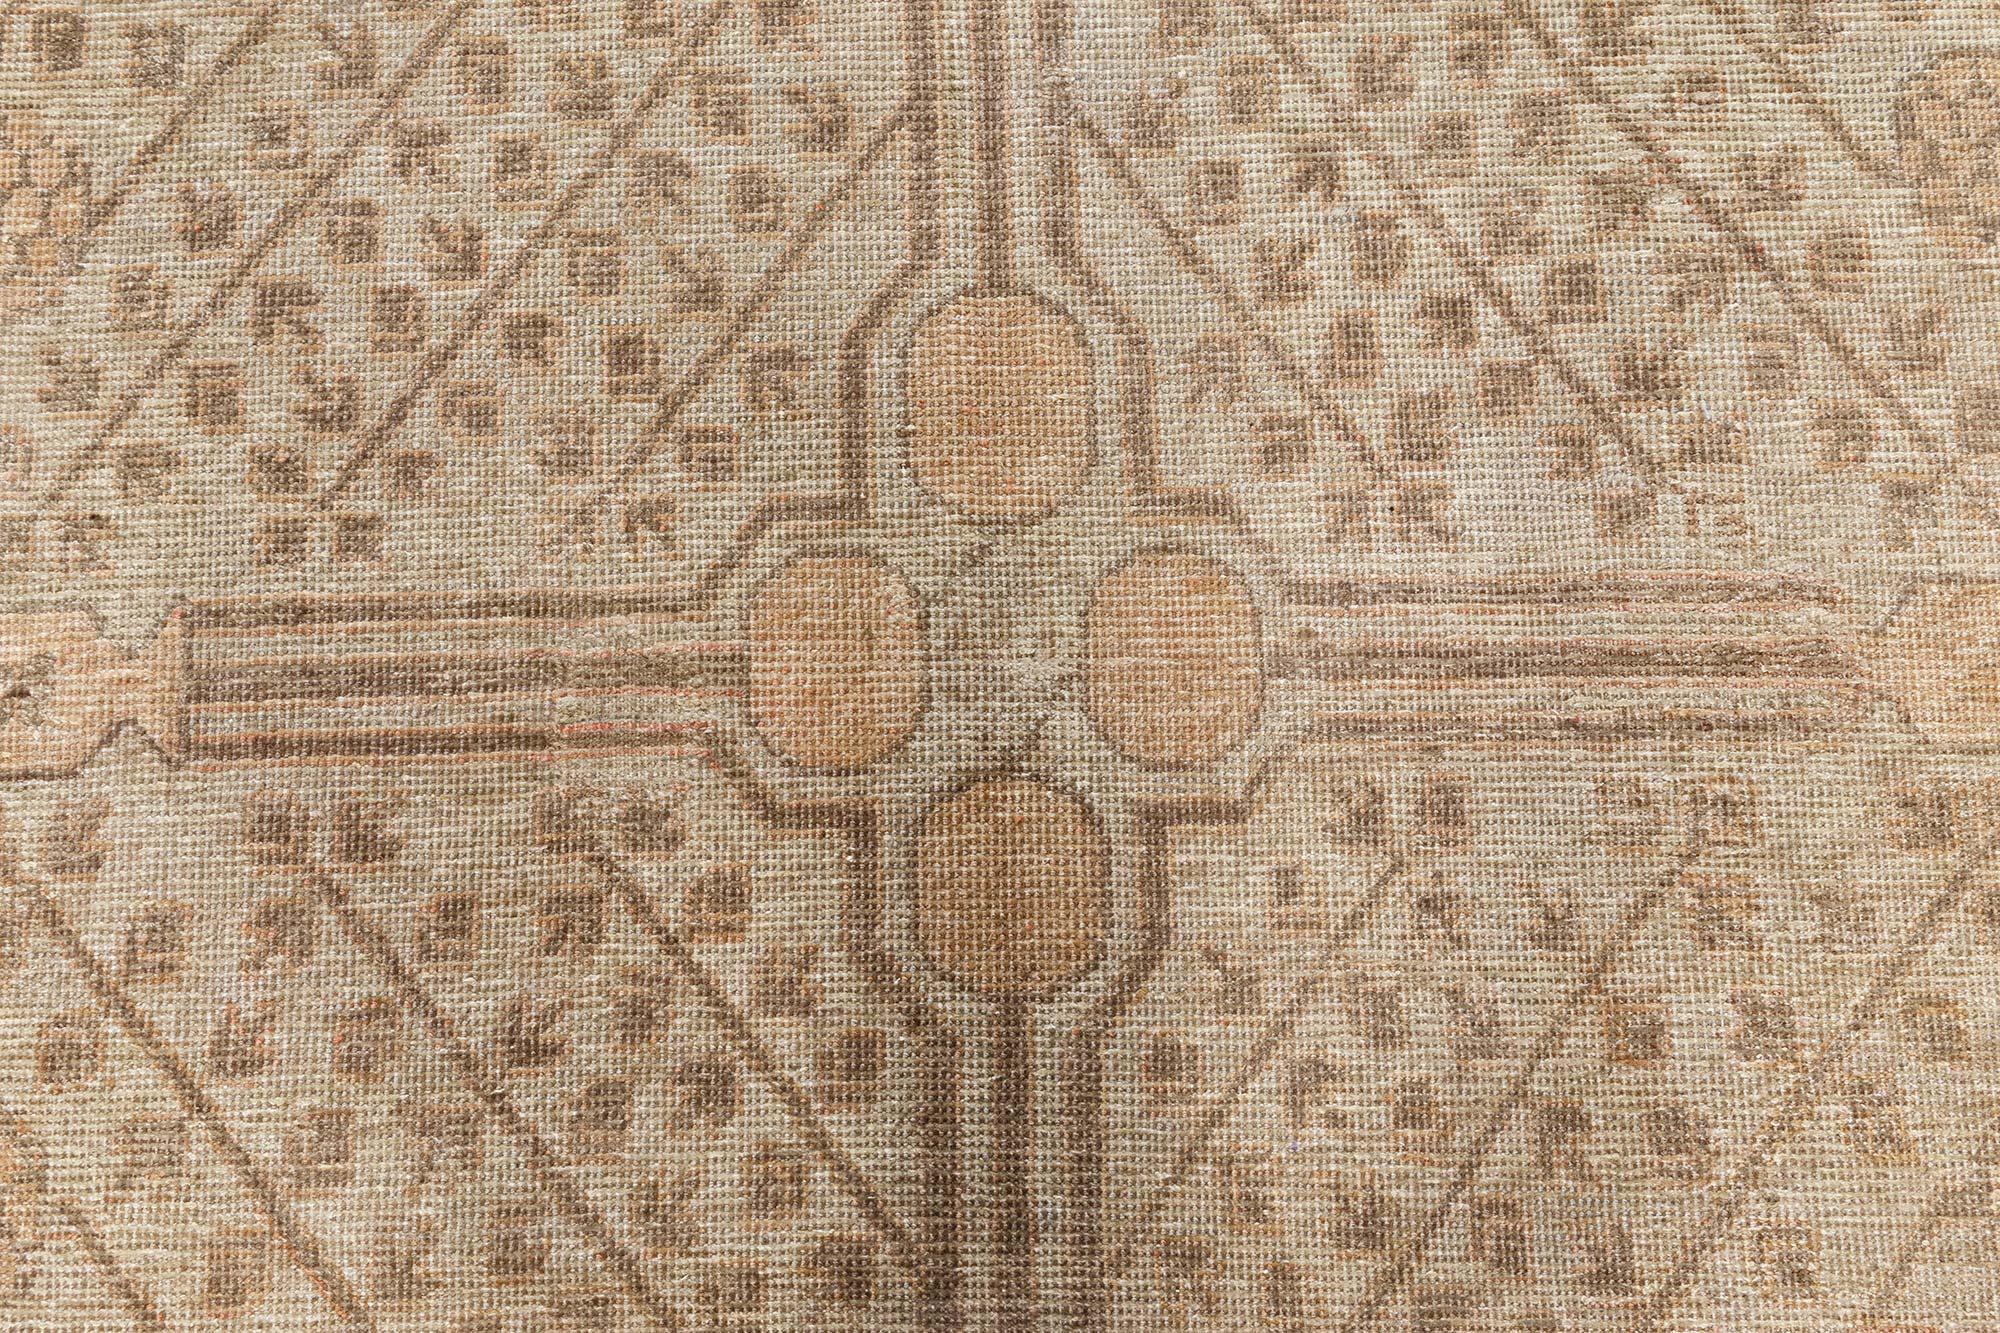 Mid-20th century Samarkand handmade wool rug.
Size: 6'1